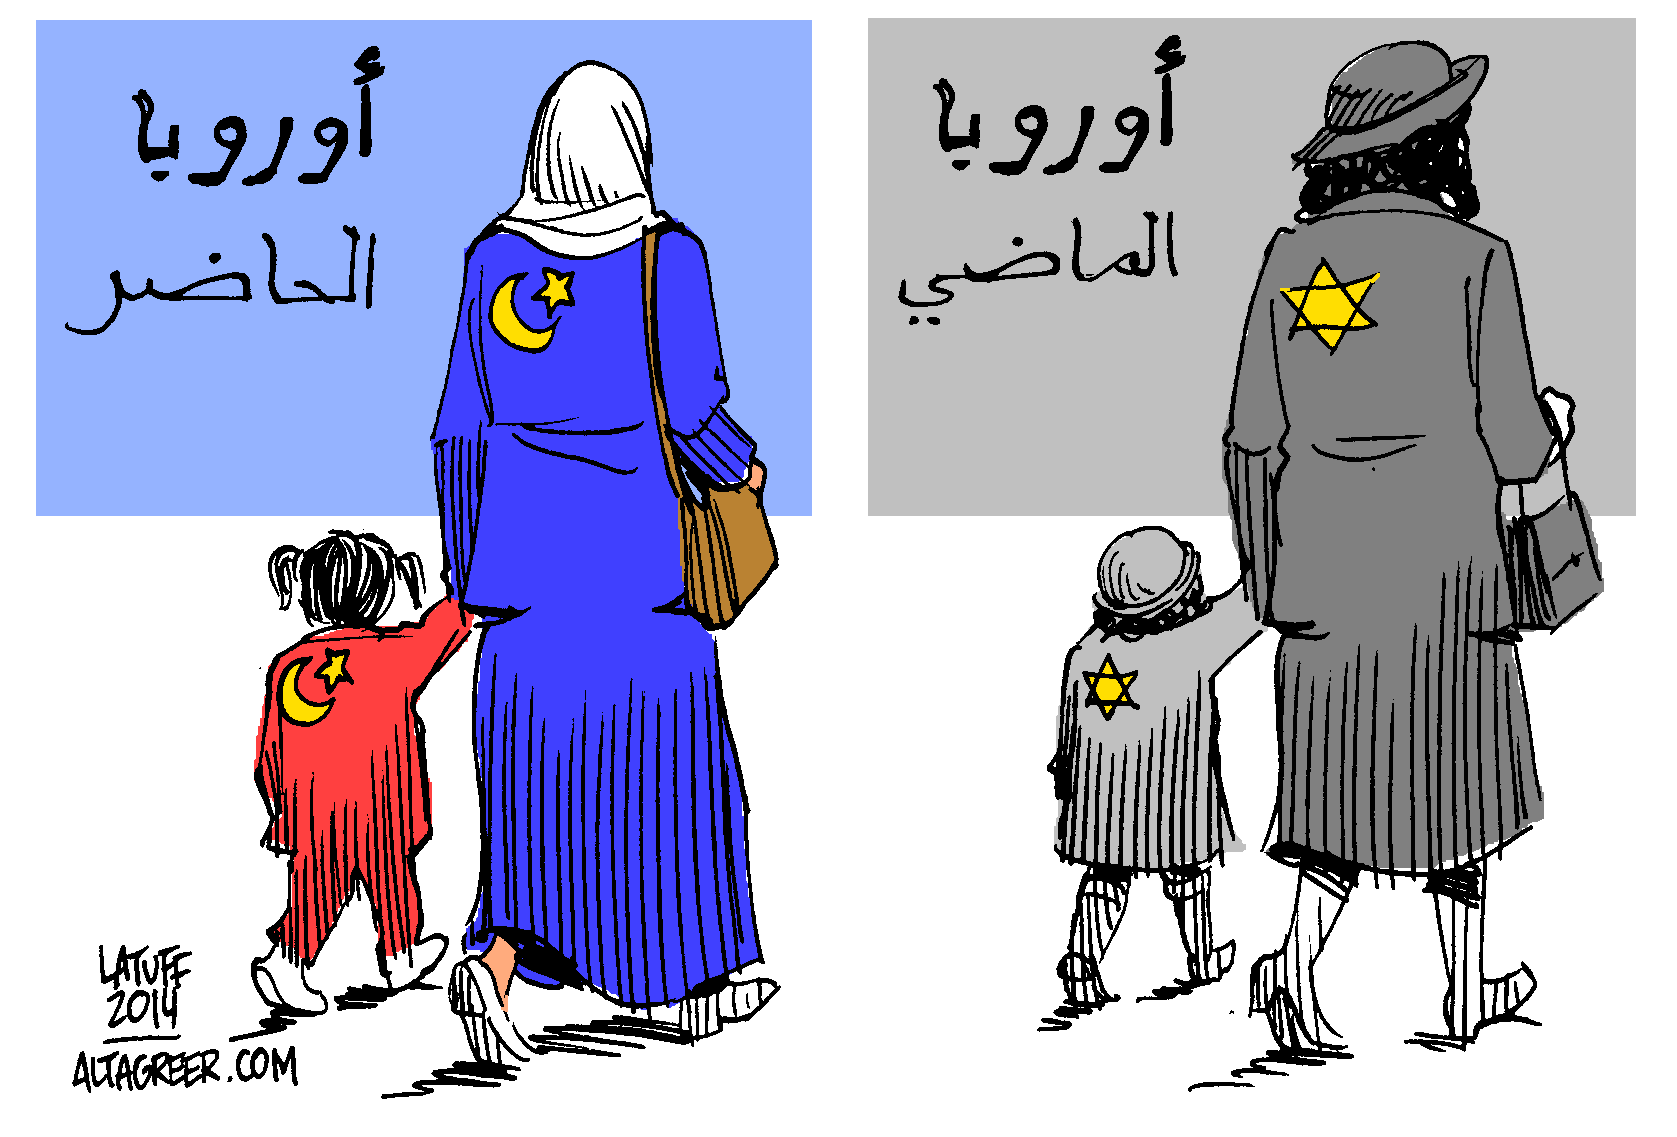 Работа карикатуриста Карлоса Латуффа на тему исламофобии в Европе